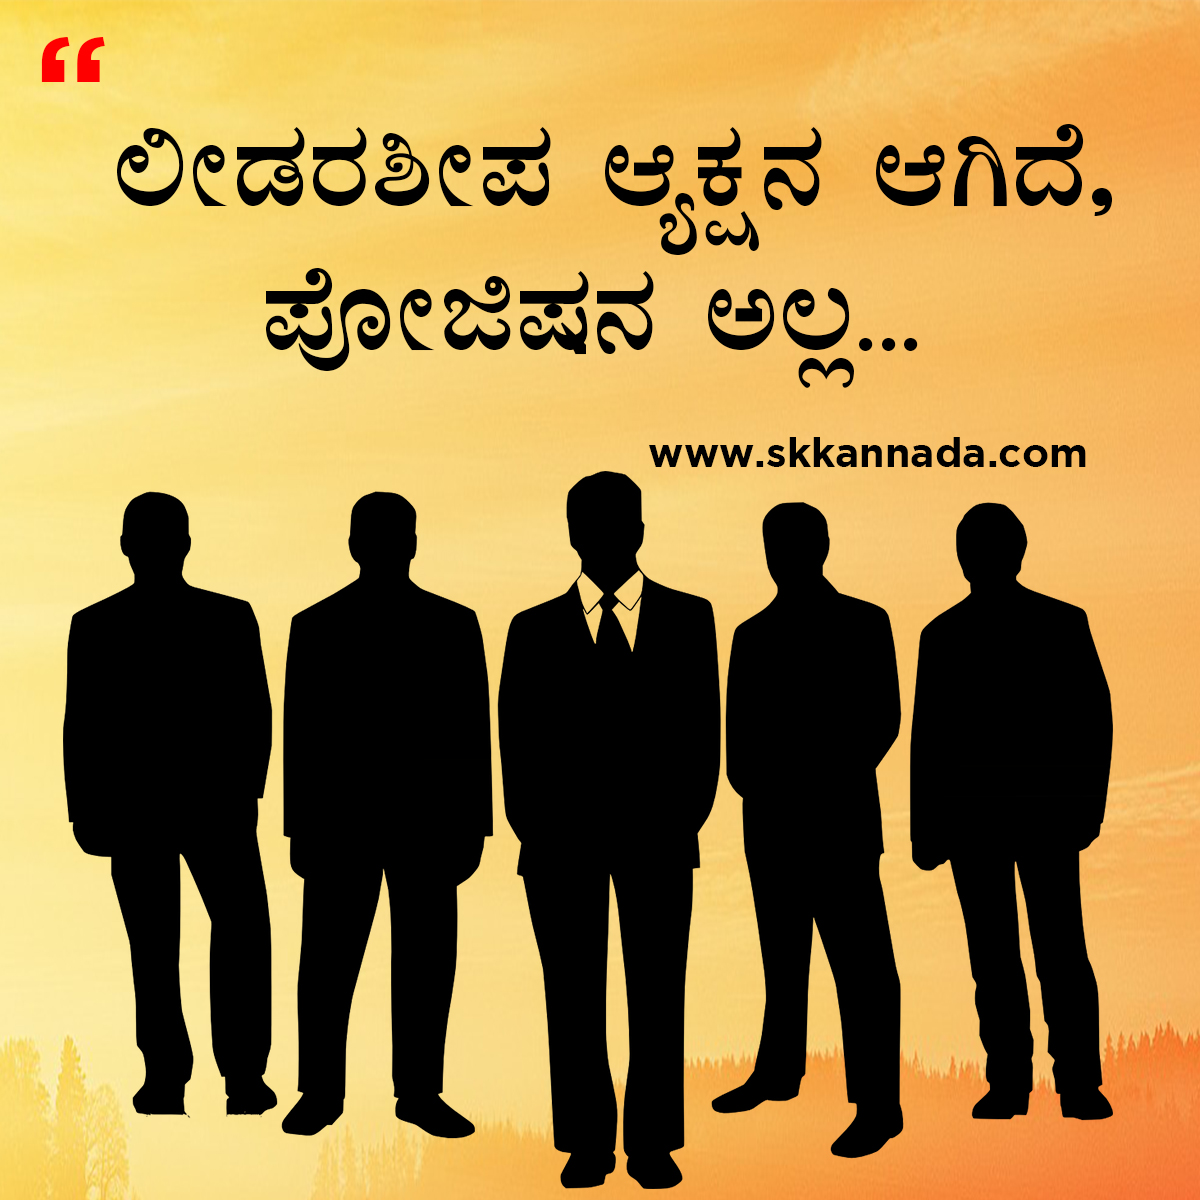 Leadership Quotes in Kannada